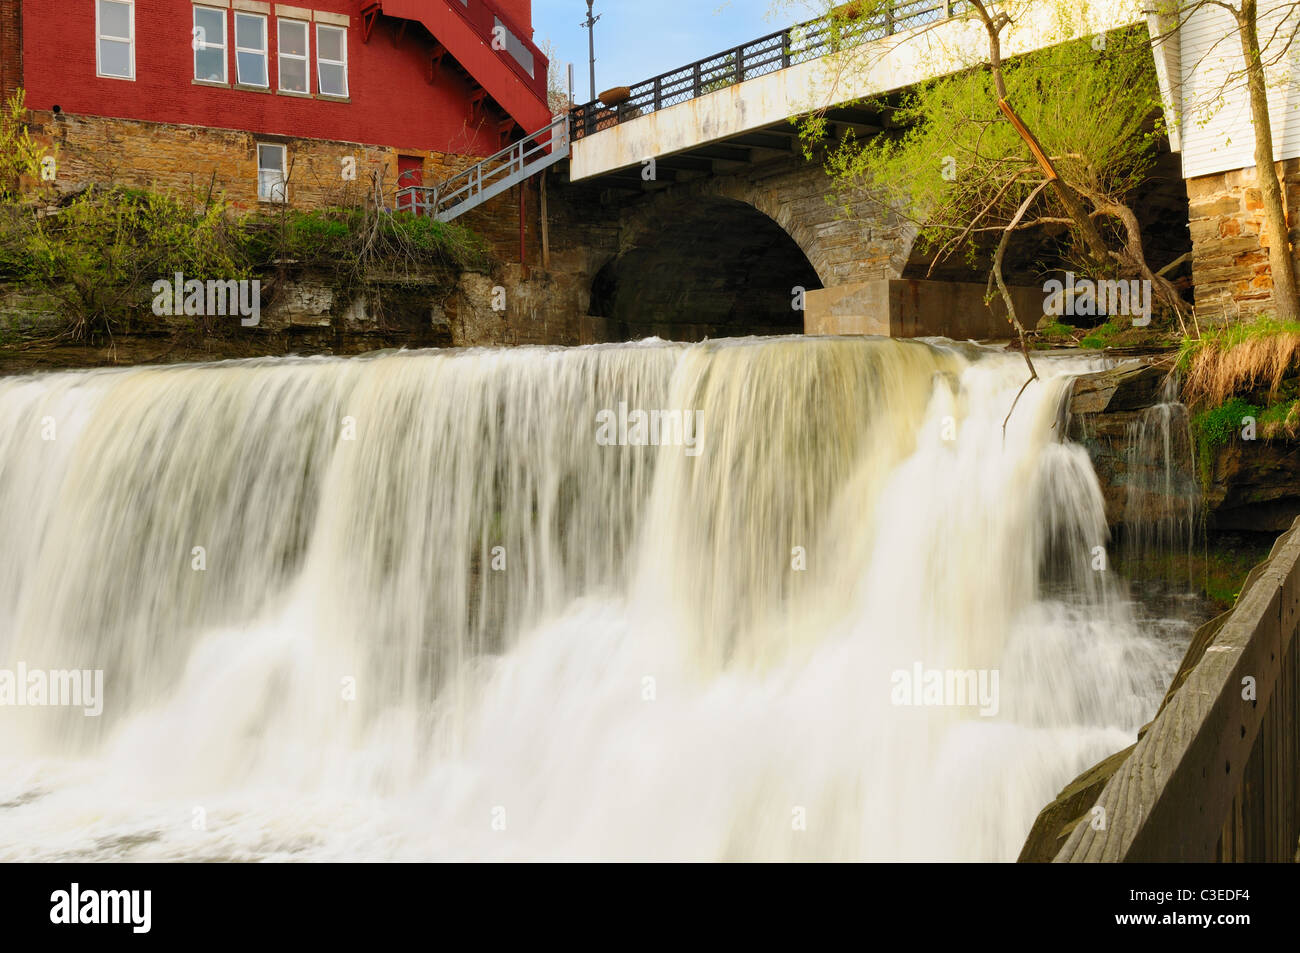 Le printemps torrent de Chagrin Falls cascades sous un pont à Chagrin Falls, Ohio Banque D'Images